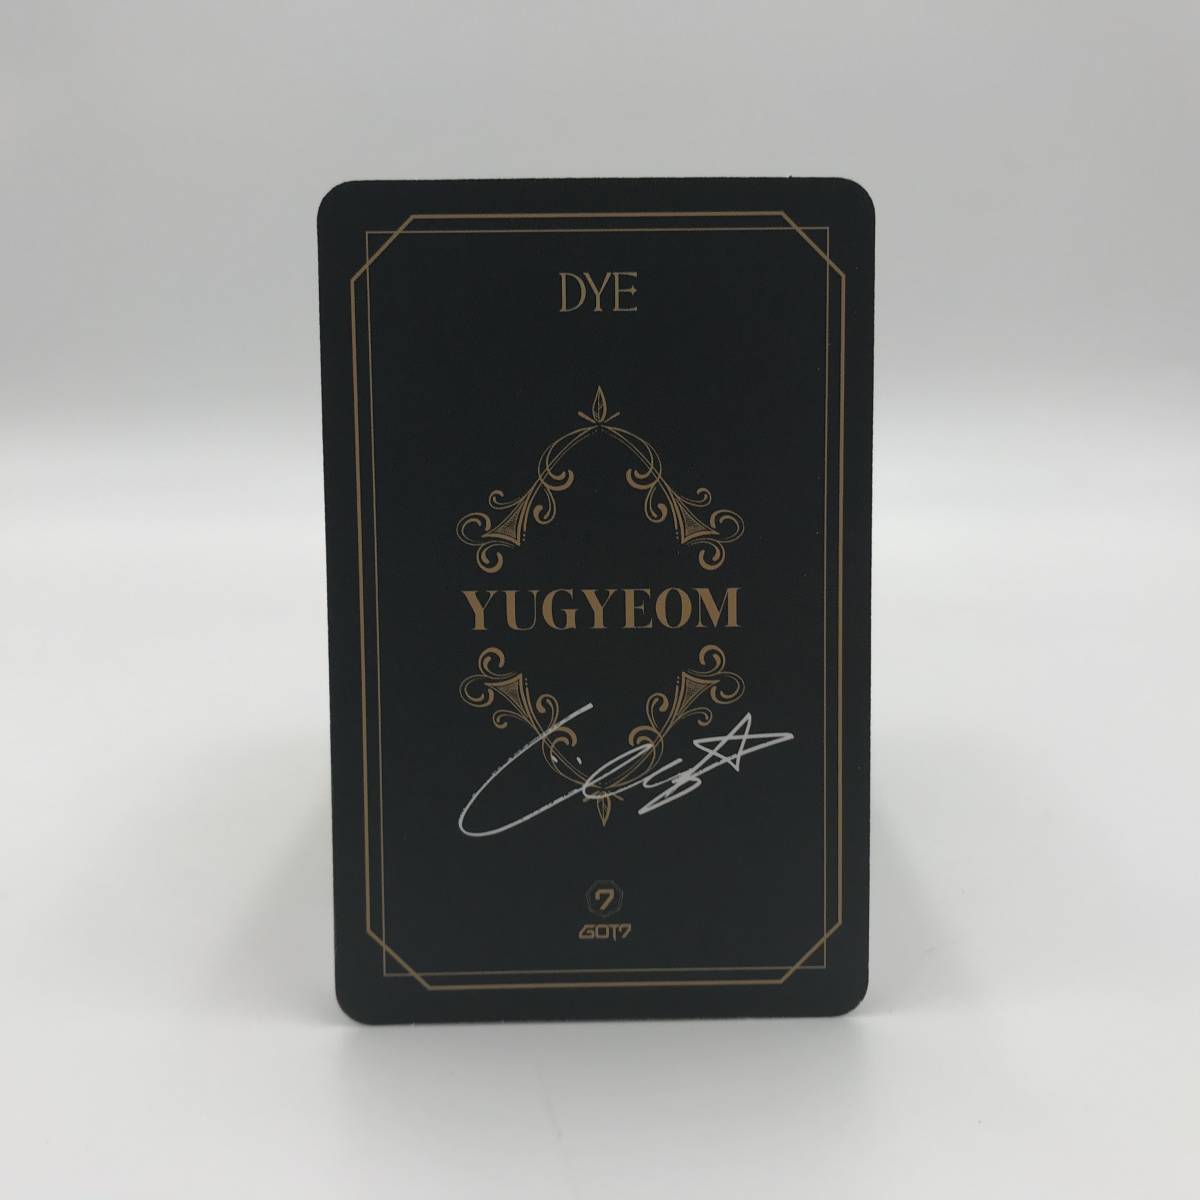 Got7 11th 1517 Dye Yugyeom Album Mini トレカ ユギョム い出のひと時に とびきりのおしゃれを Mini